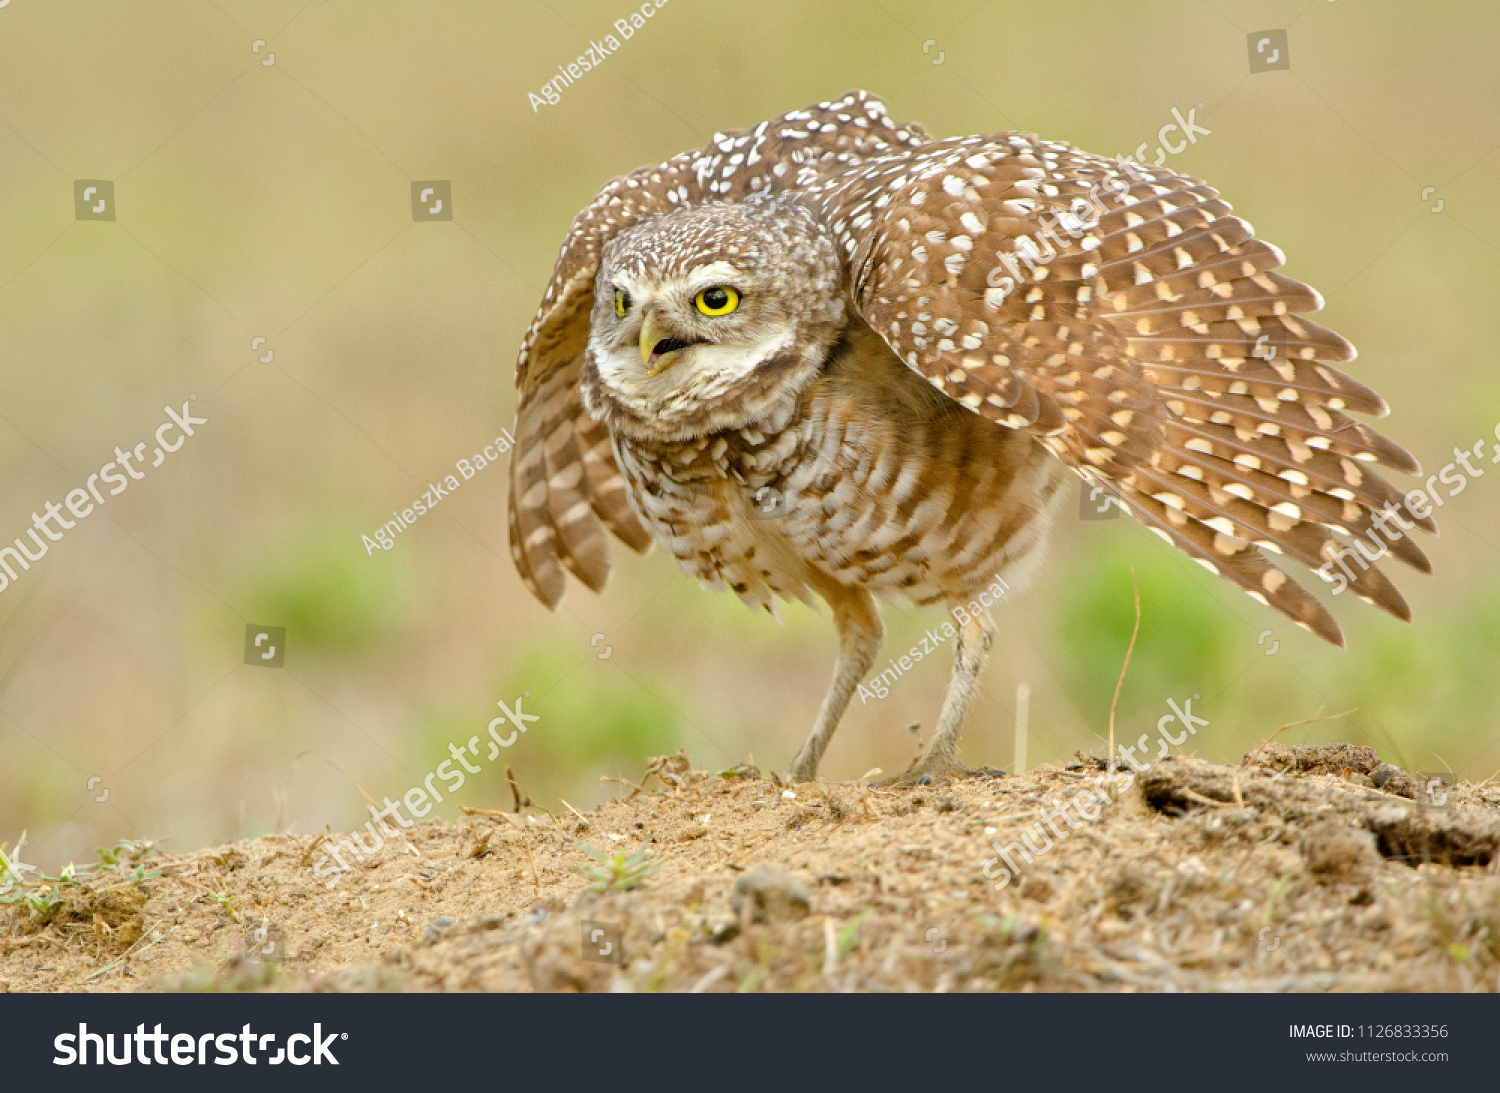 stock-photo-burrowing-owl-defense-pose-in-florida-agnieszka-bacal-1126833356.jpg